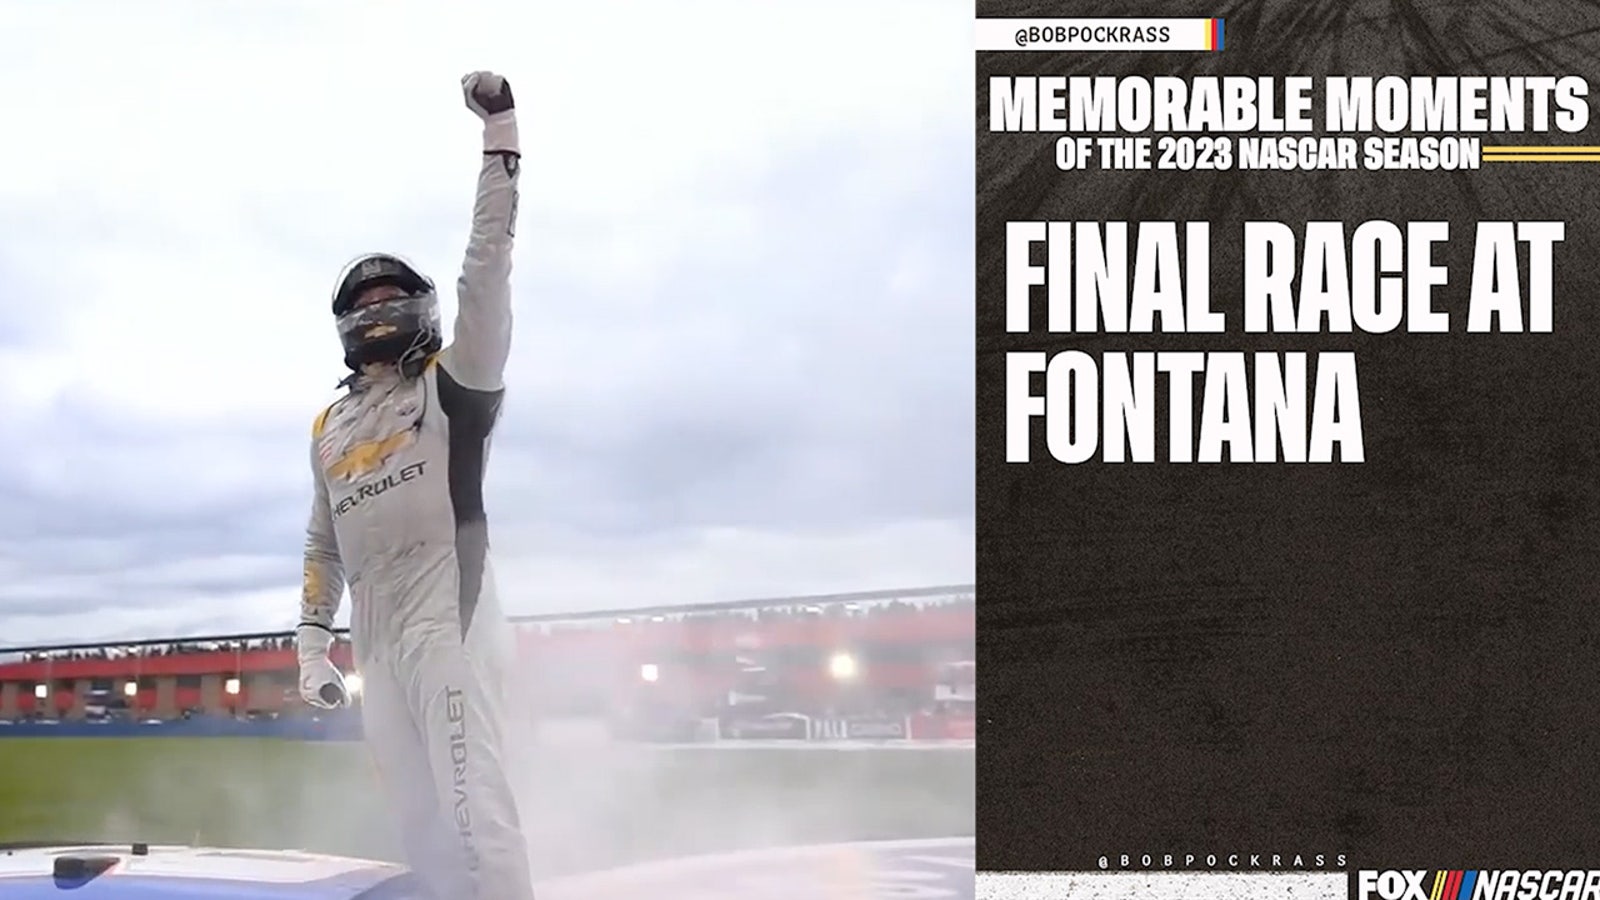 Final race at Fontana | Most Memorable Moments of 2023 NASCAR Season